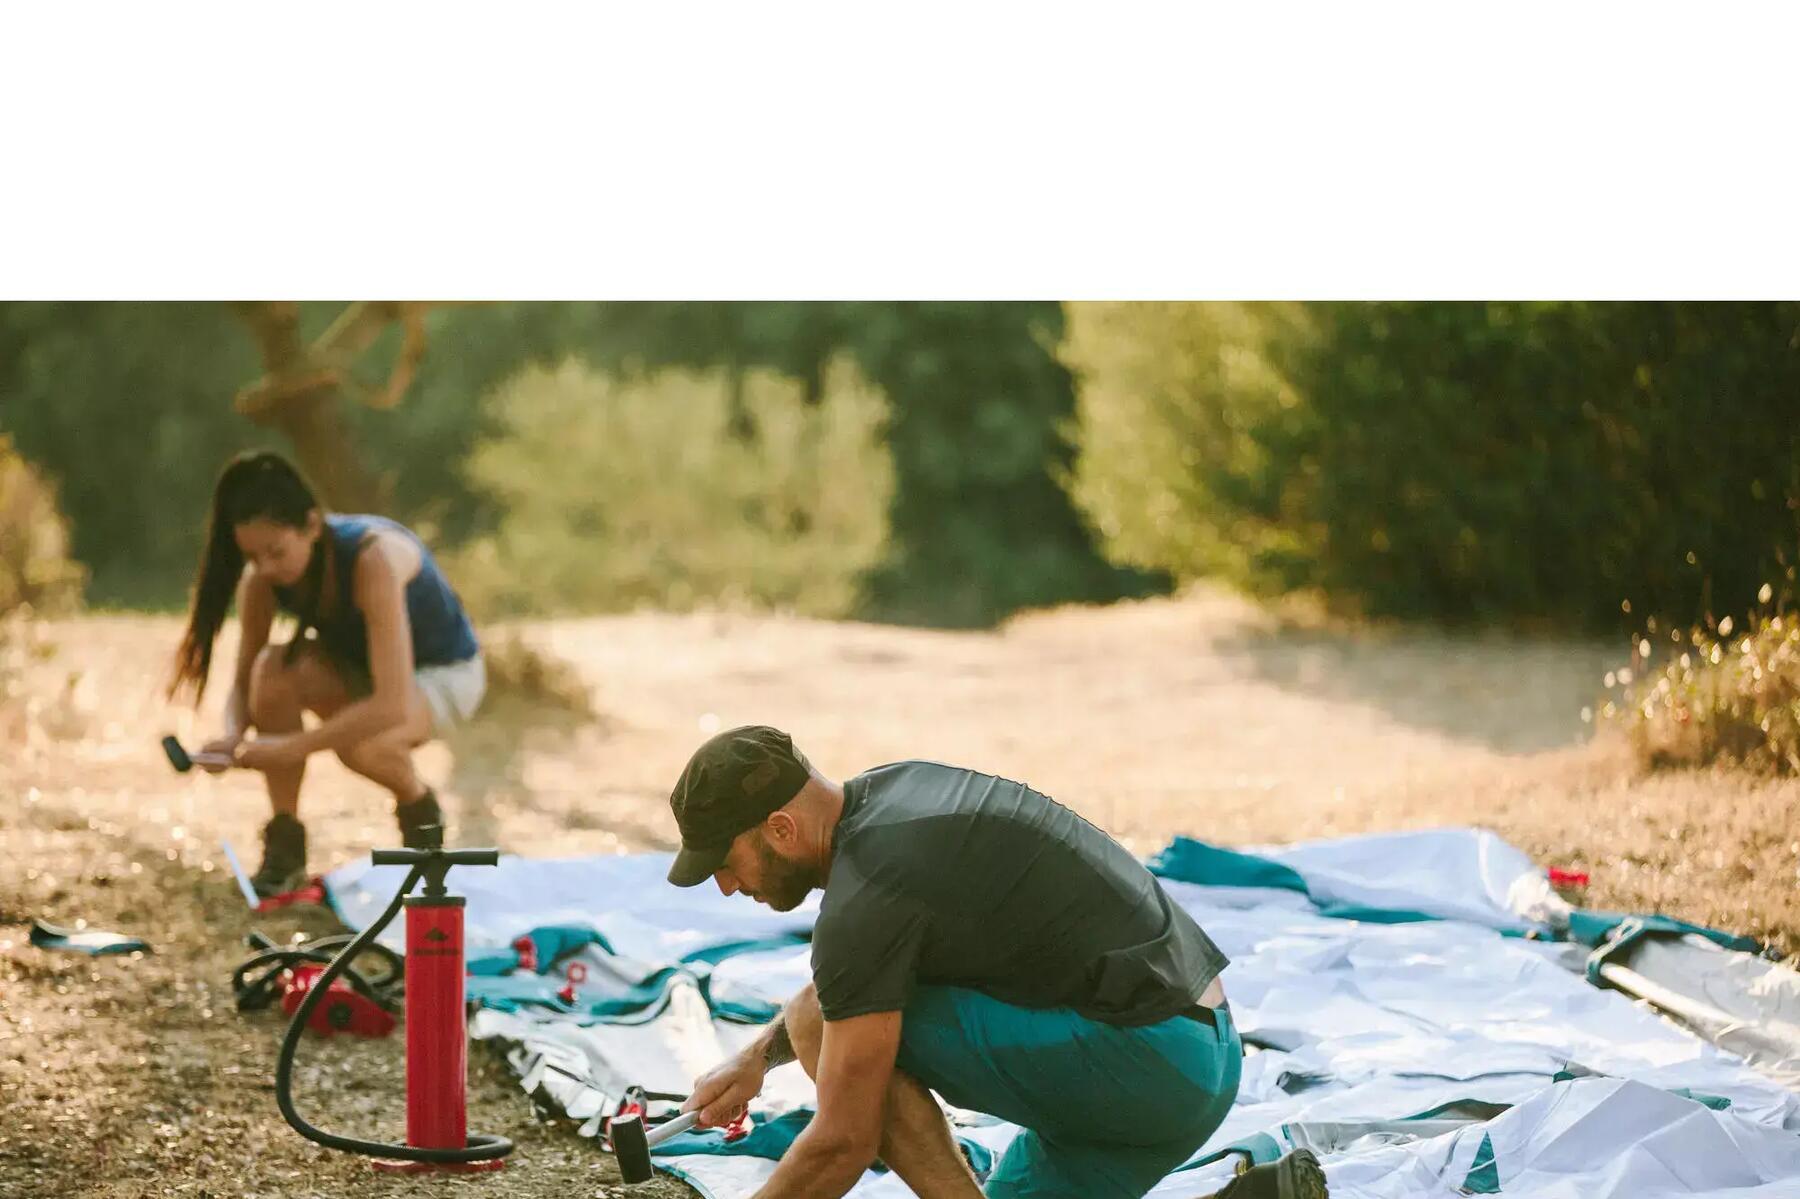 Comment choisir sa tente de camping gonflable ? 